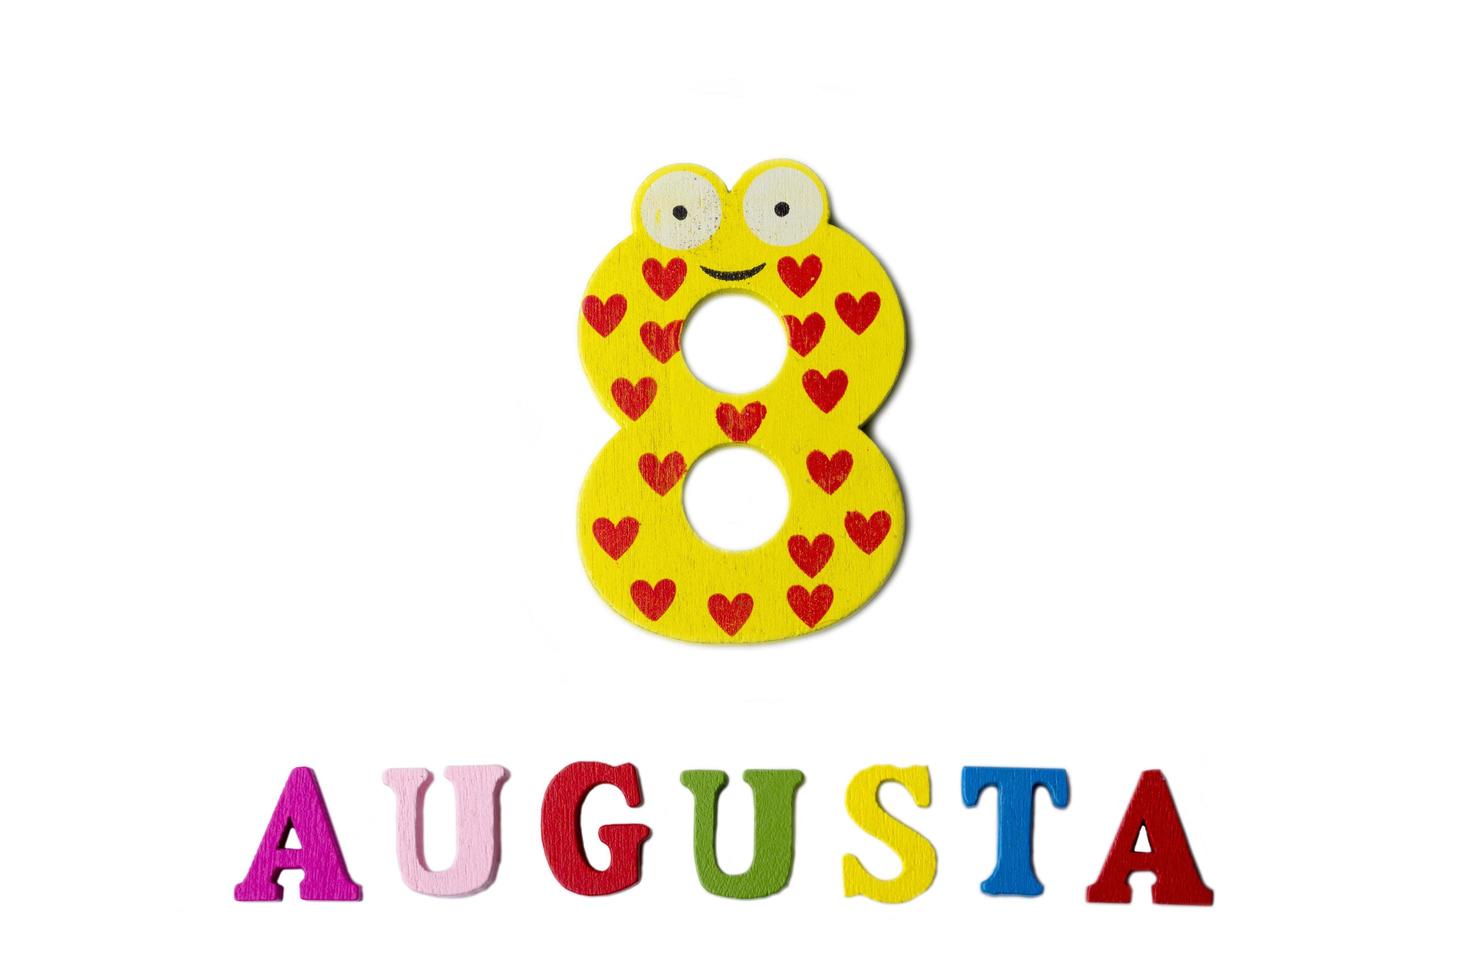 8 augustus. afbeelding van 8 augustus, close-up van cijfers en letters op witte achtergrond. foto